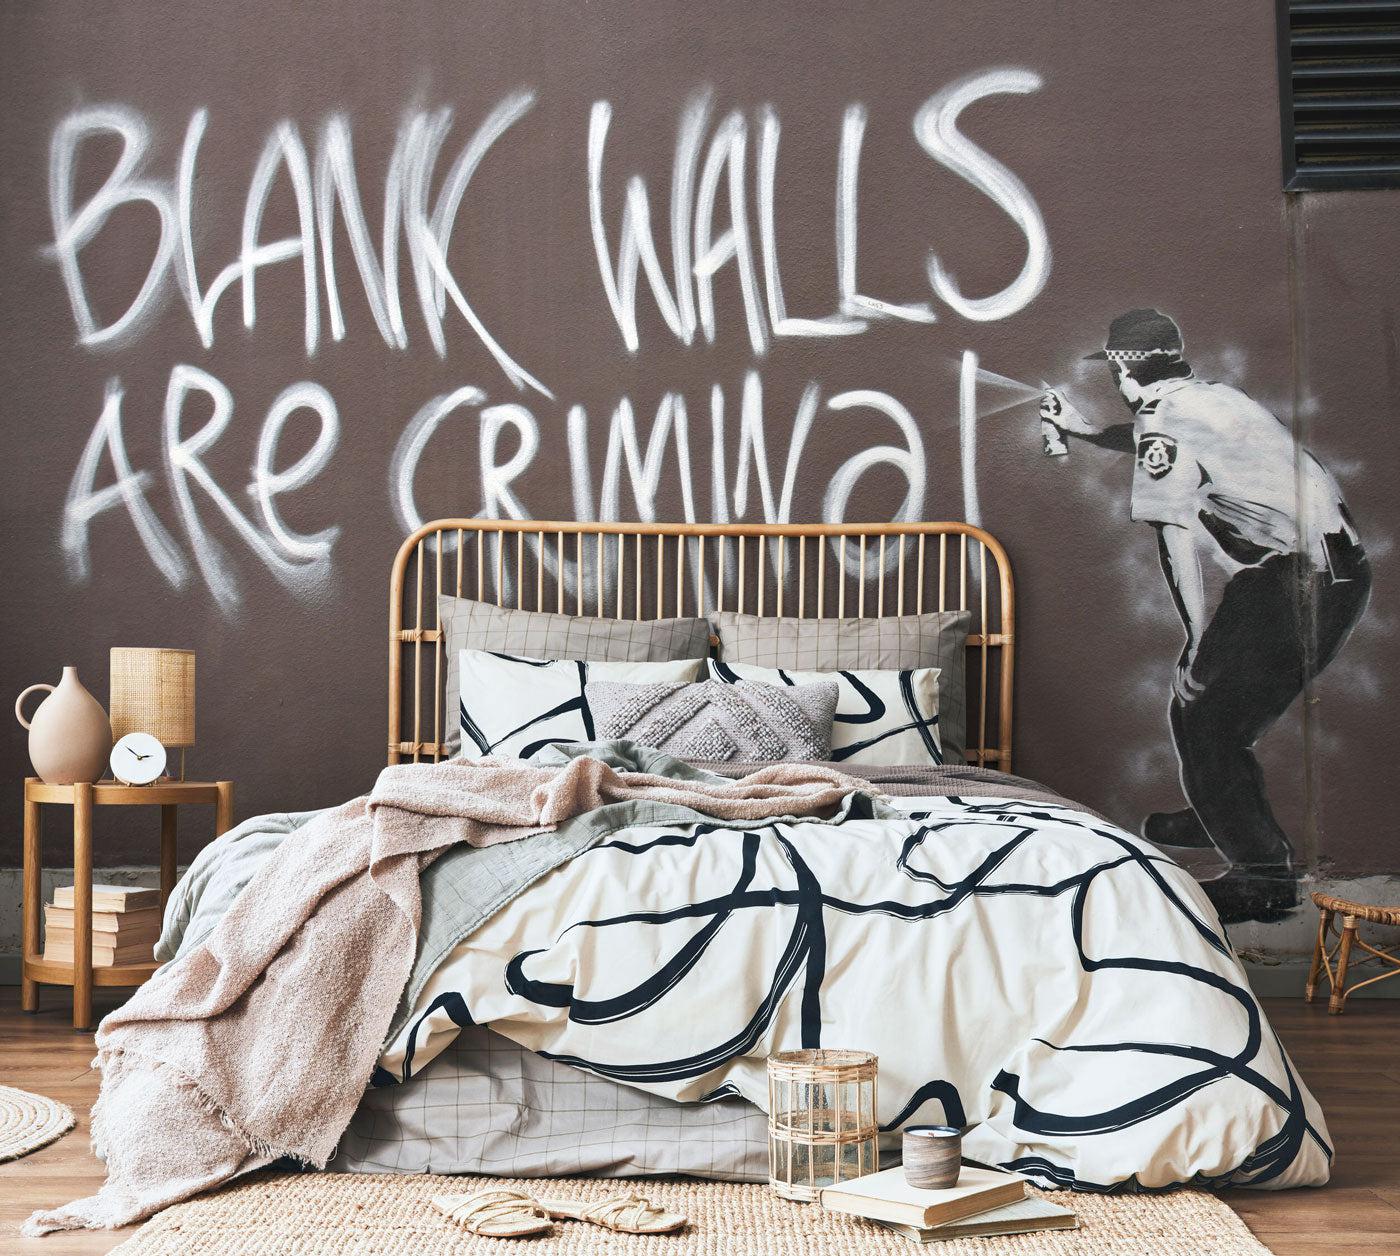 Blank walls are criminal Wall Mural-Wall Mural-Eazywallz